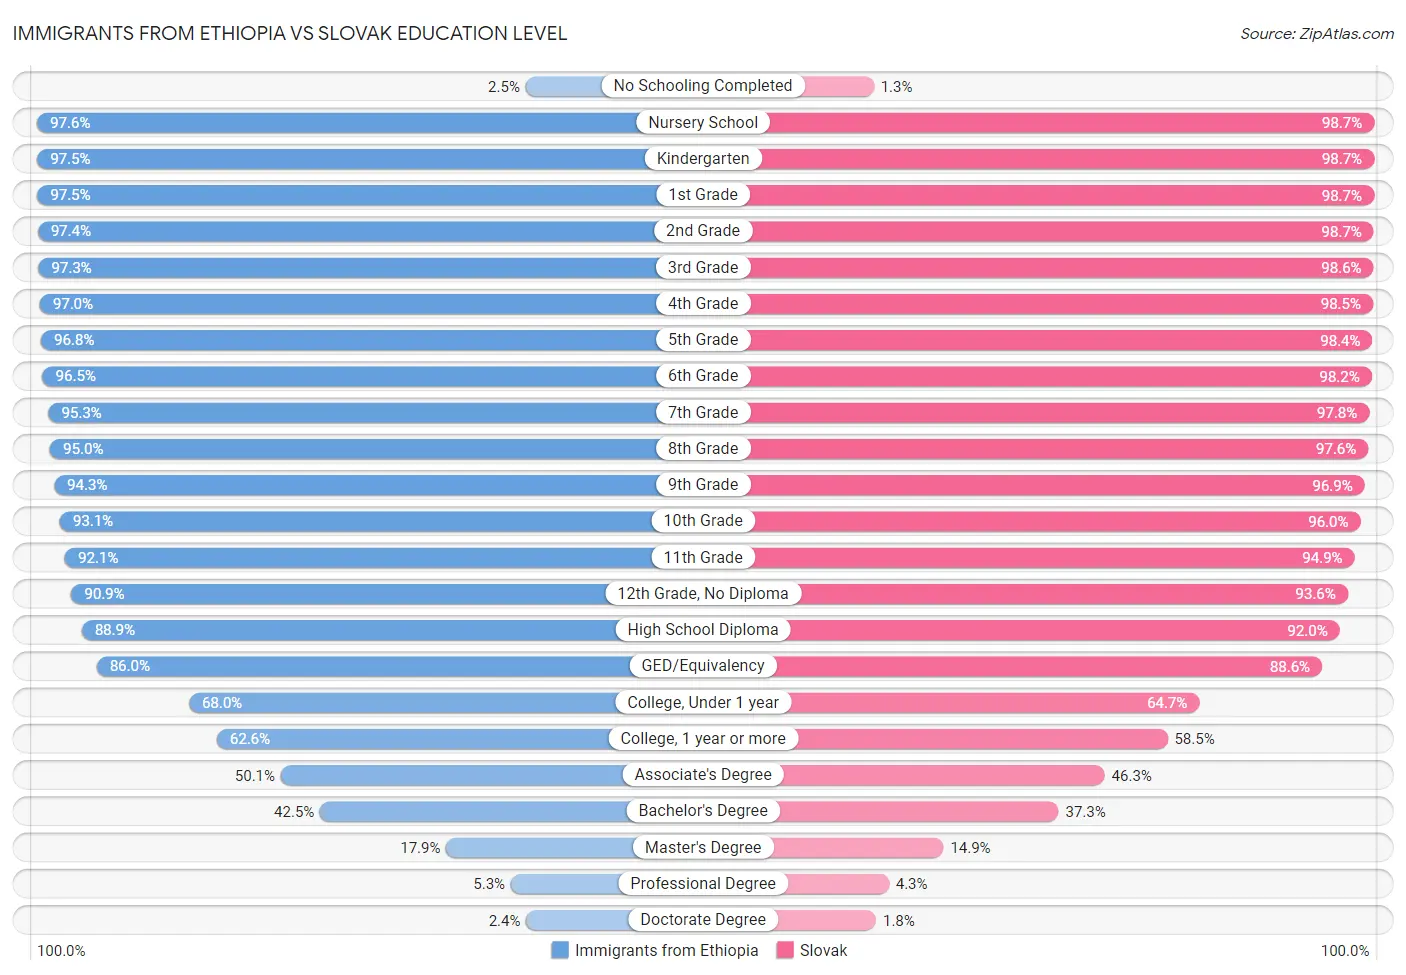 Immigrants from Ethiopia vs Slovak Education Level